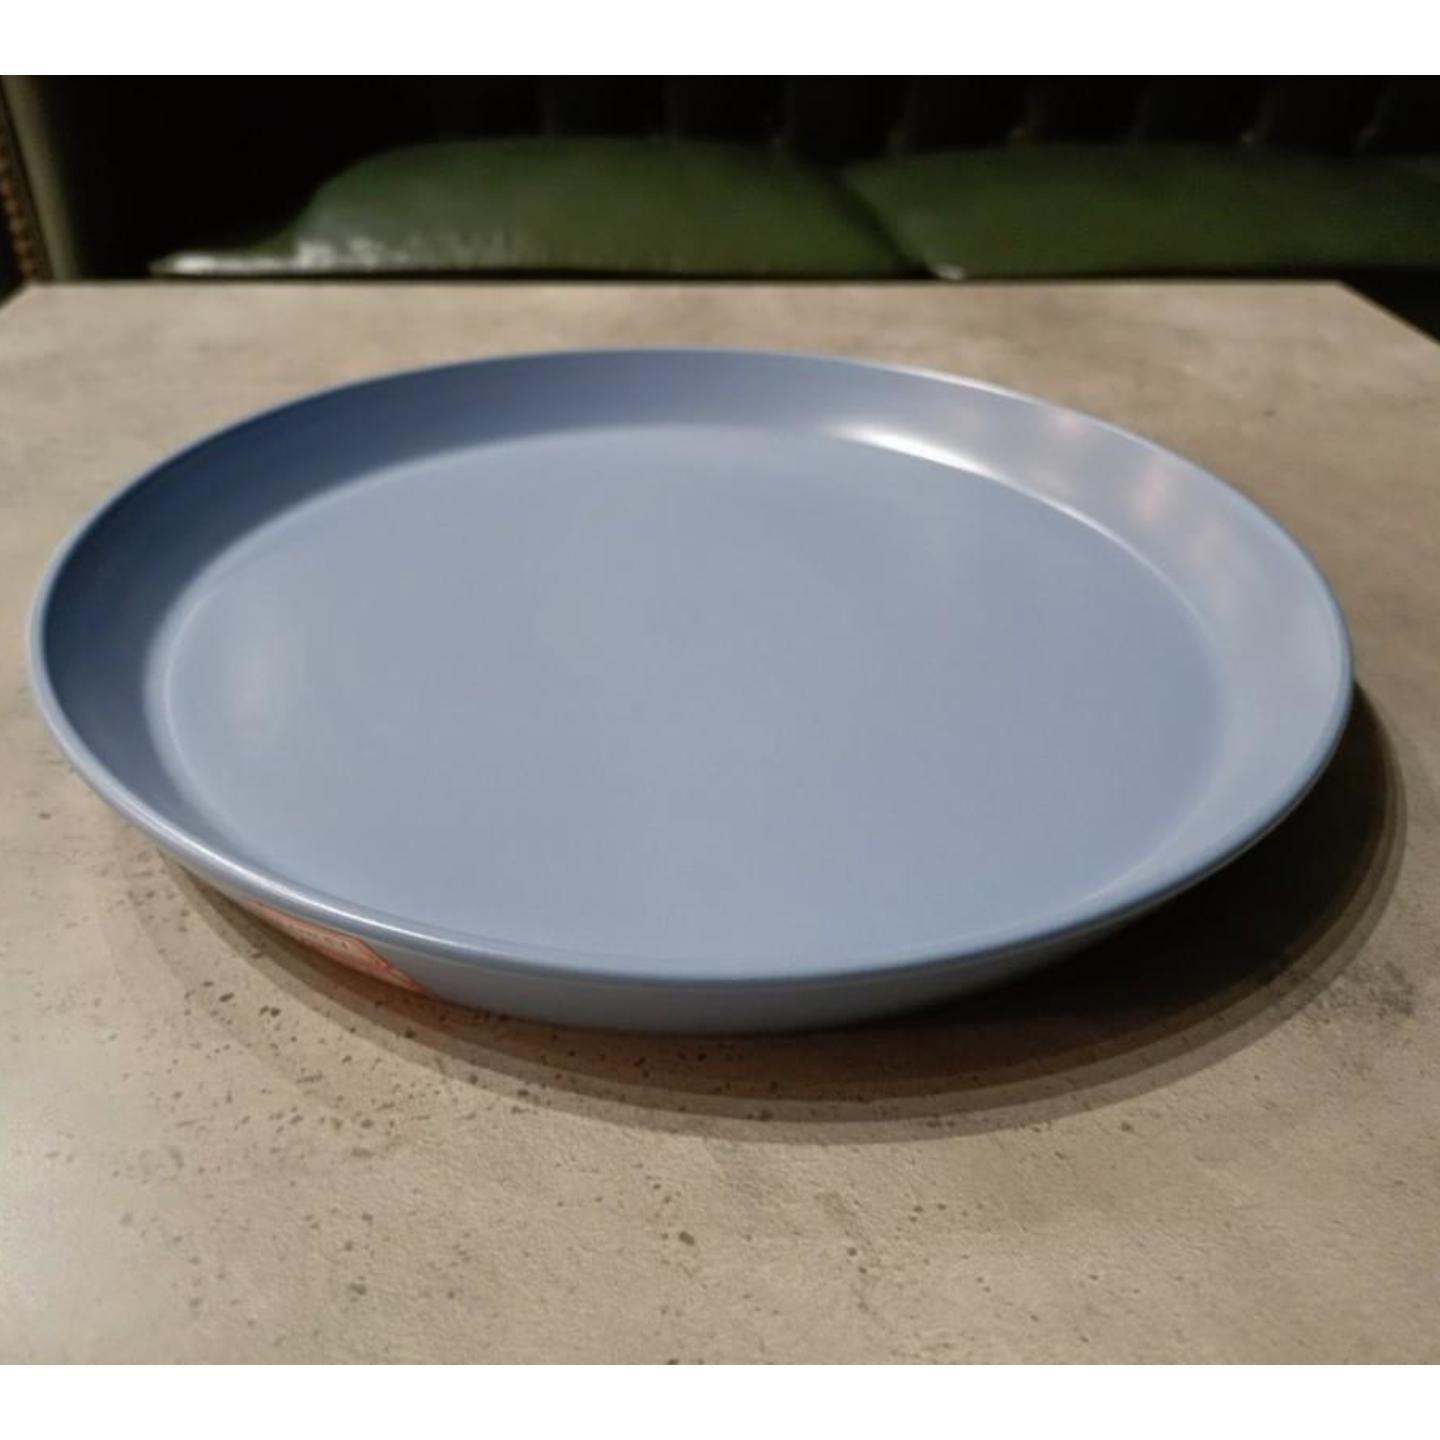 POSA Ceramic Dinner Plate in BLUE